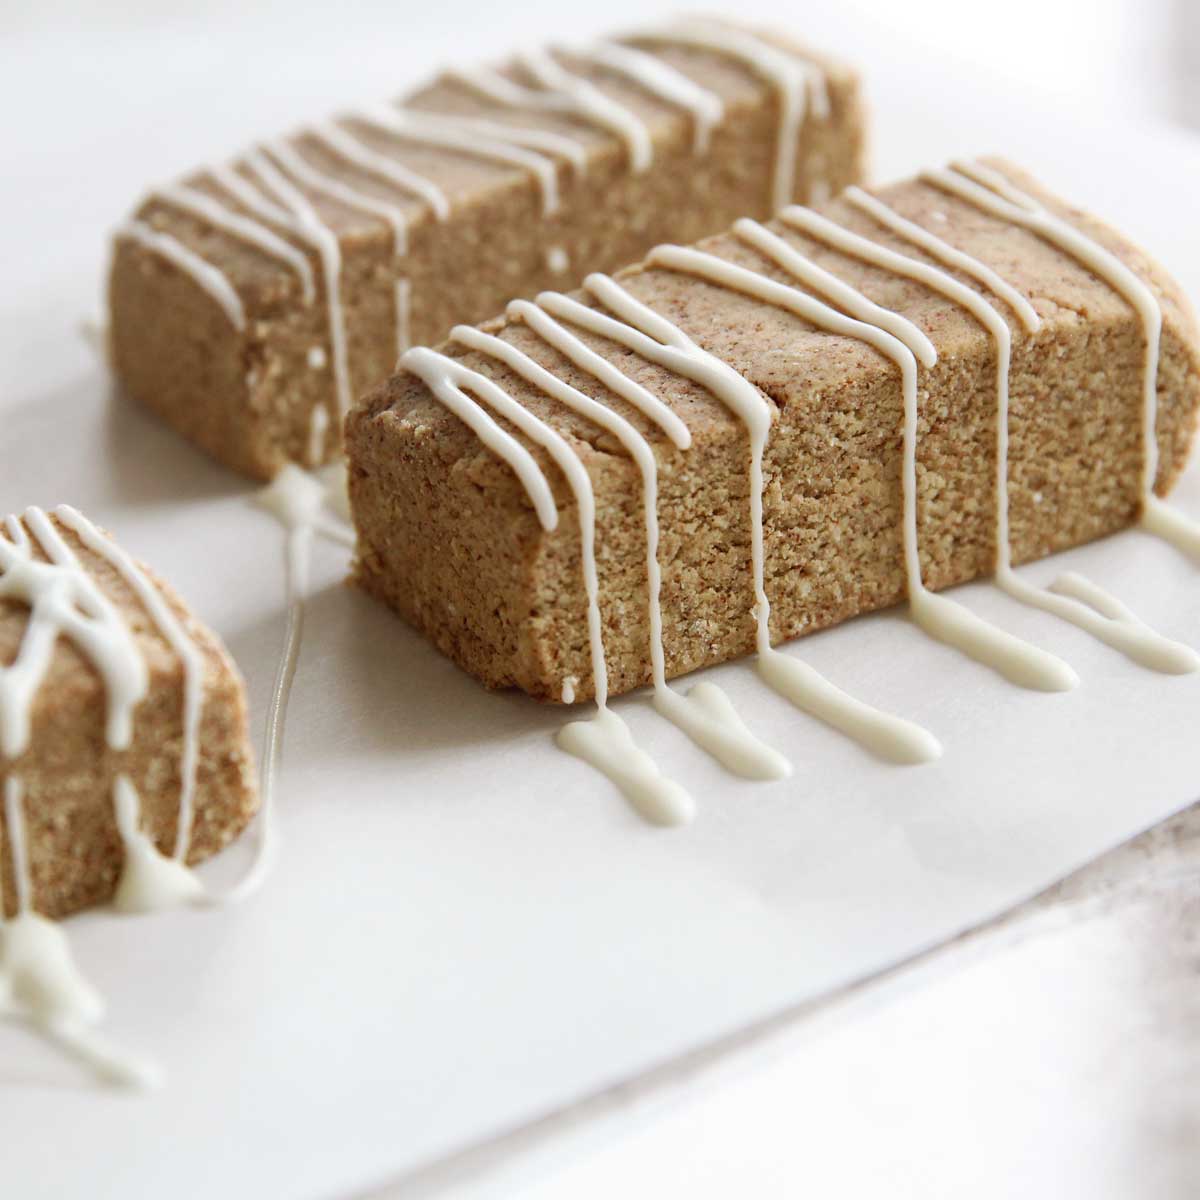 Applesauce Birthday Cake Protein Bars Recipe (Nut-Free, Plant-Based) - birthday cake protein bars